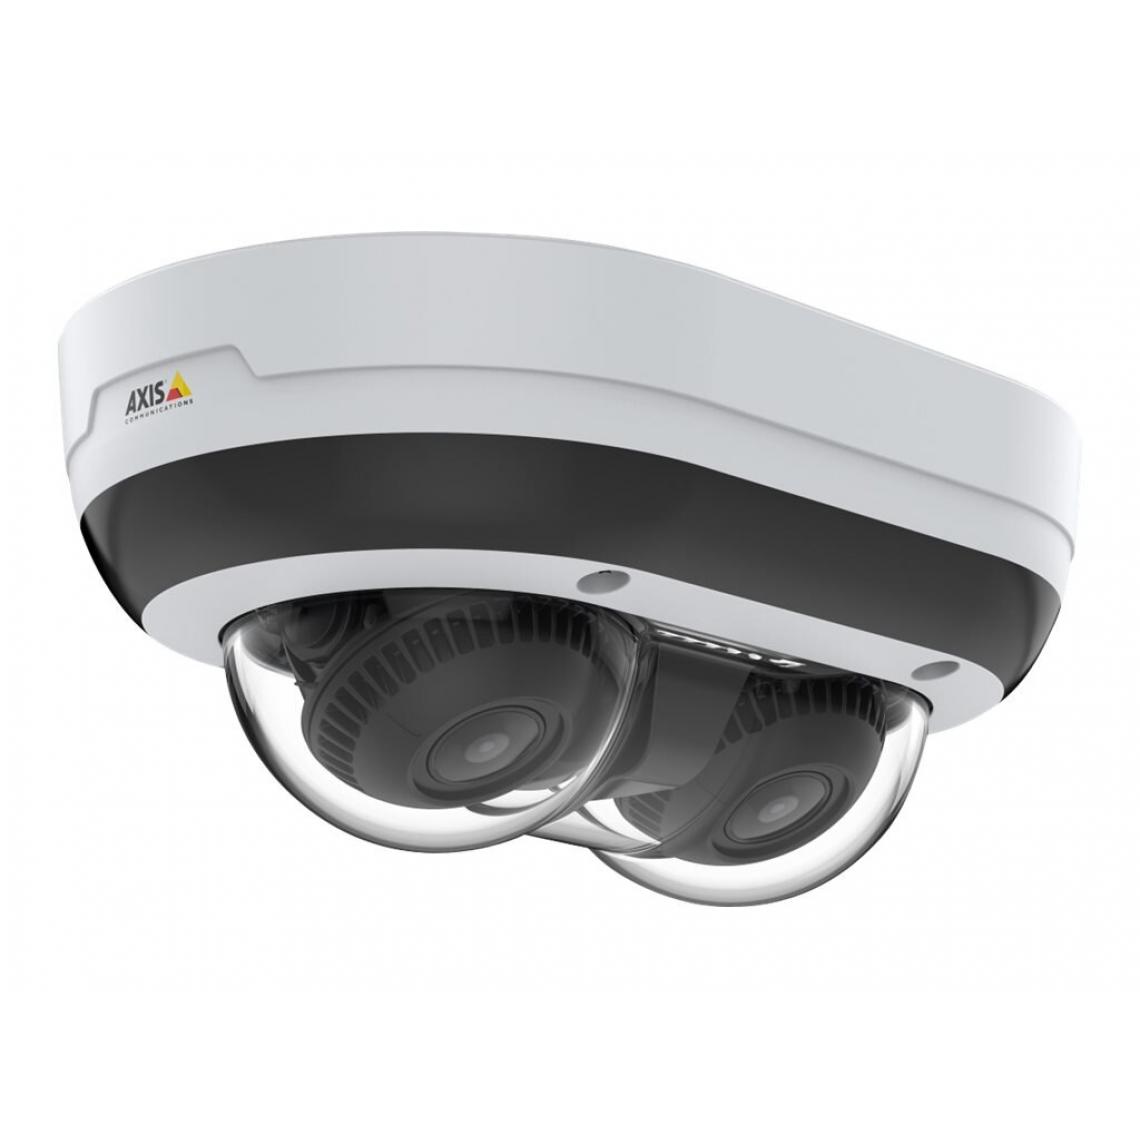 Axis - P3715-PLVE - Caméra de surveillance connectée